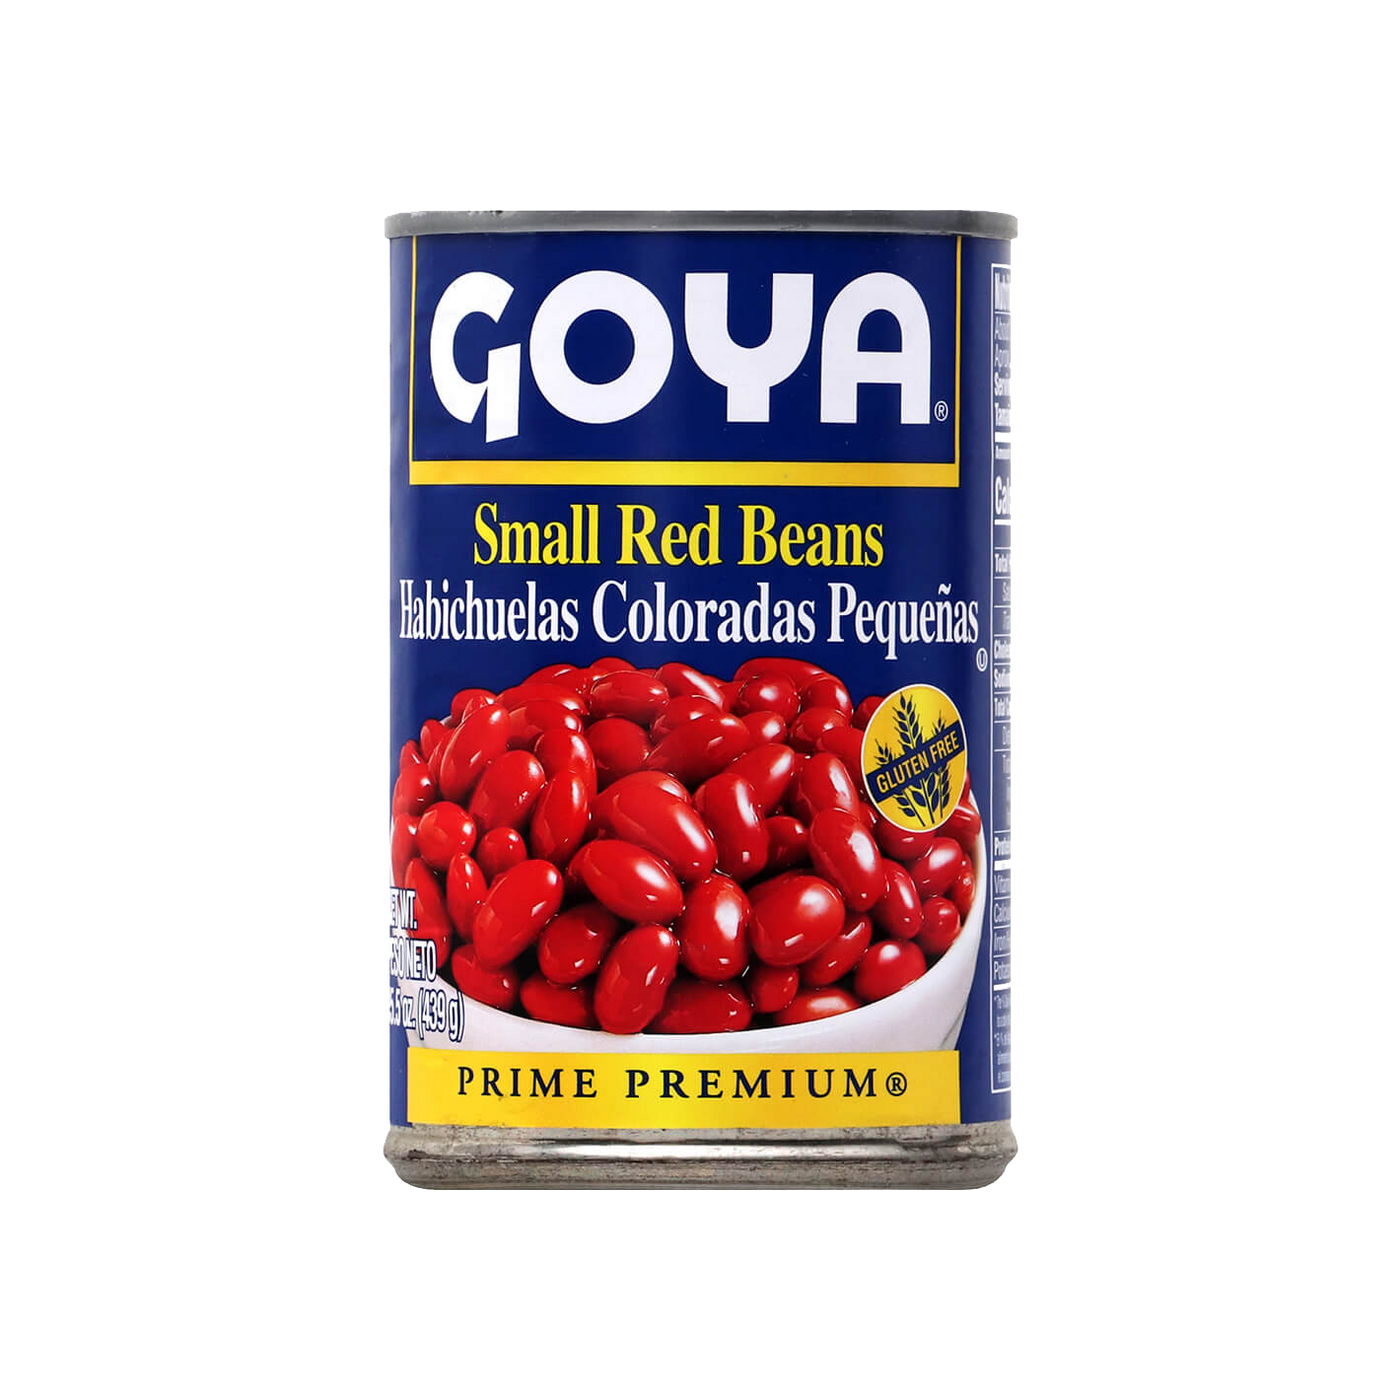   Goya Small Reds